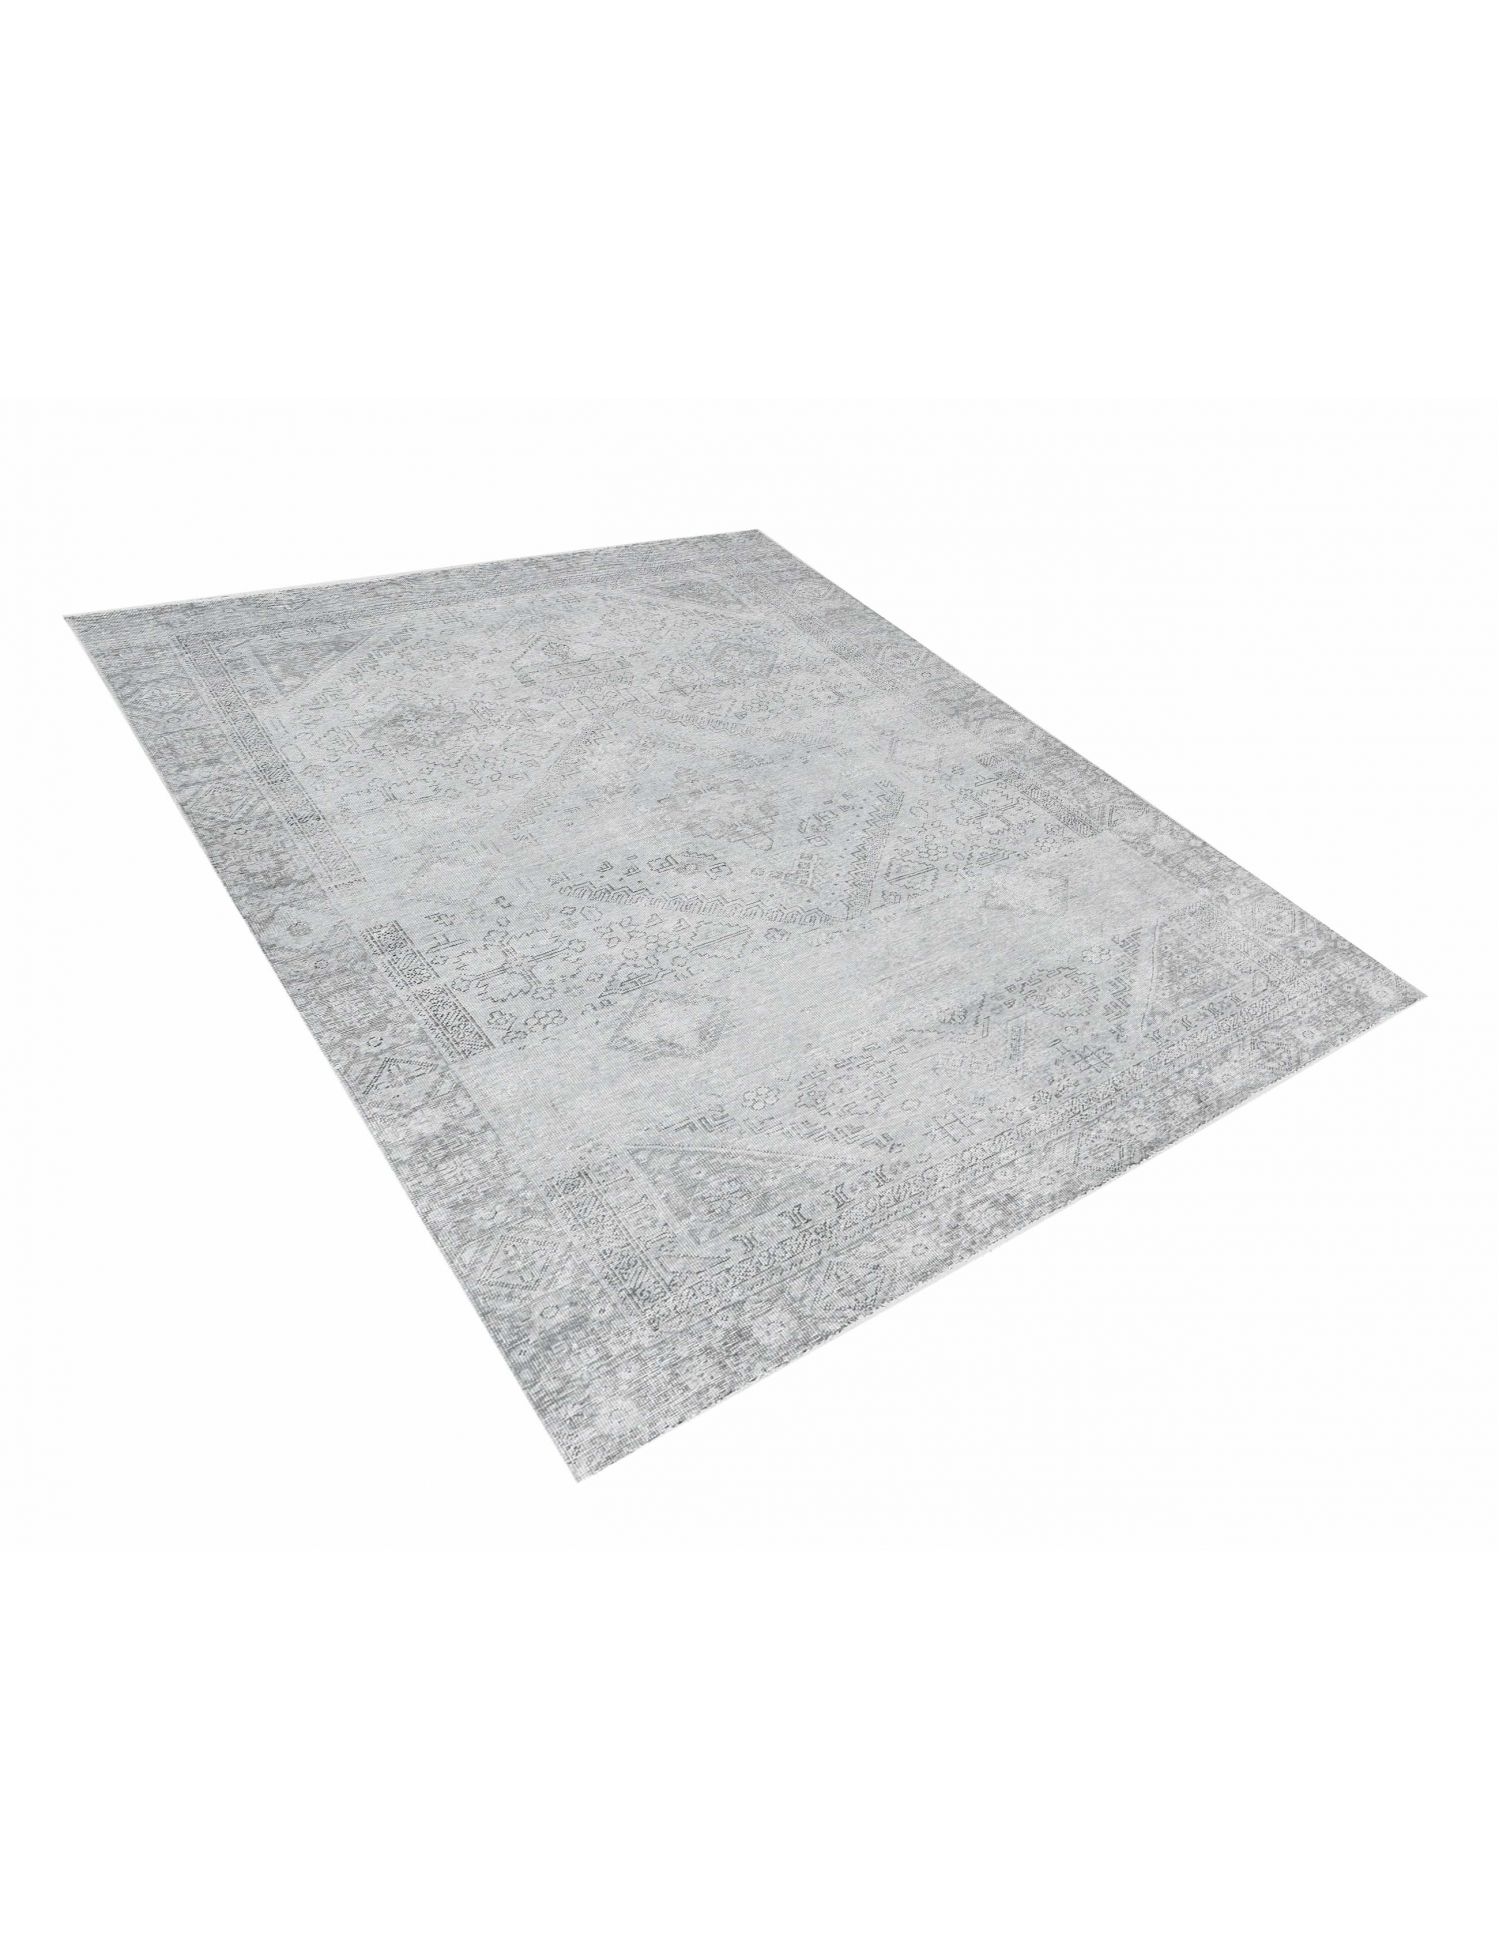 Vintage Carpet  grey <br/>286 x 186 cm